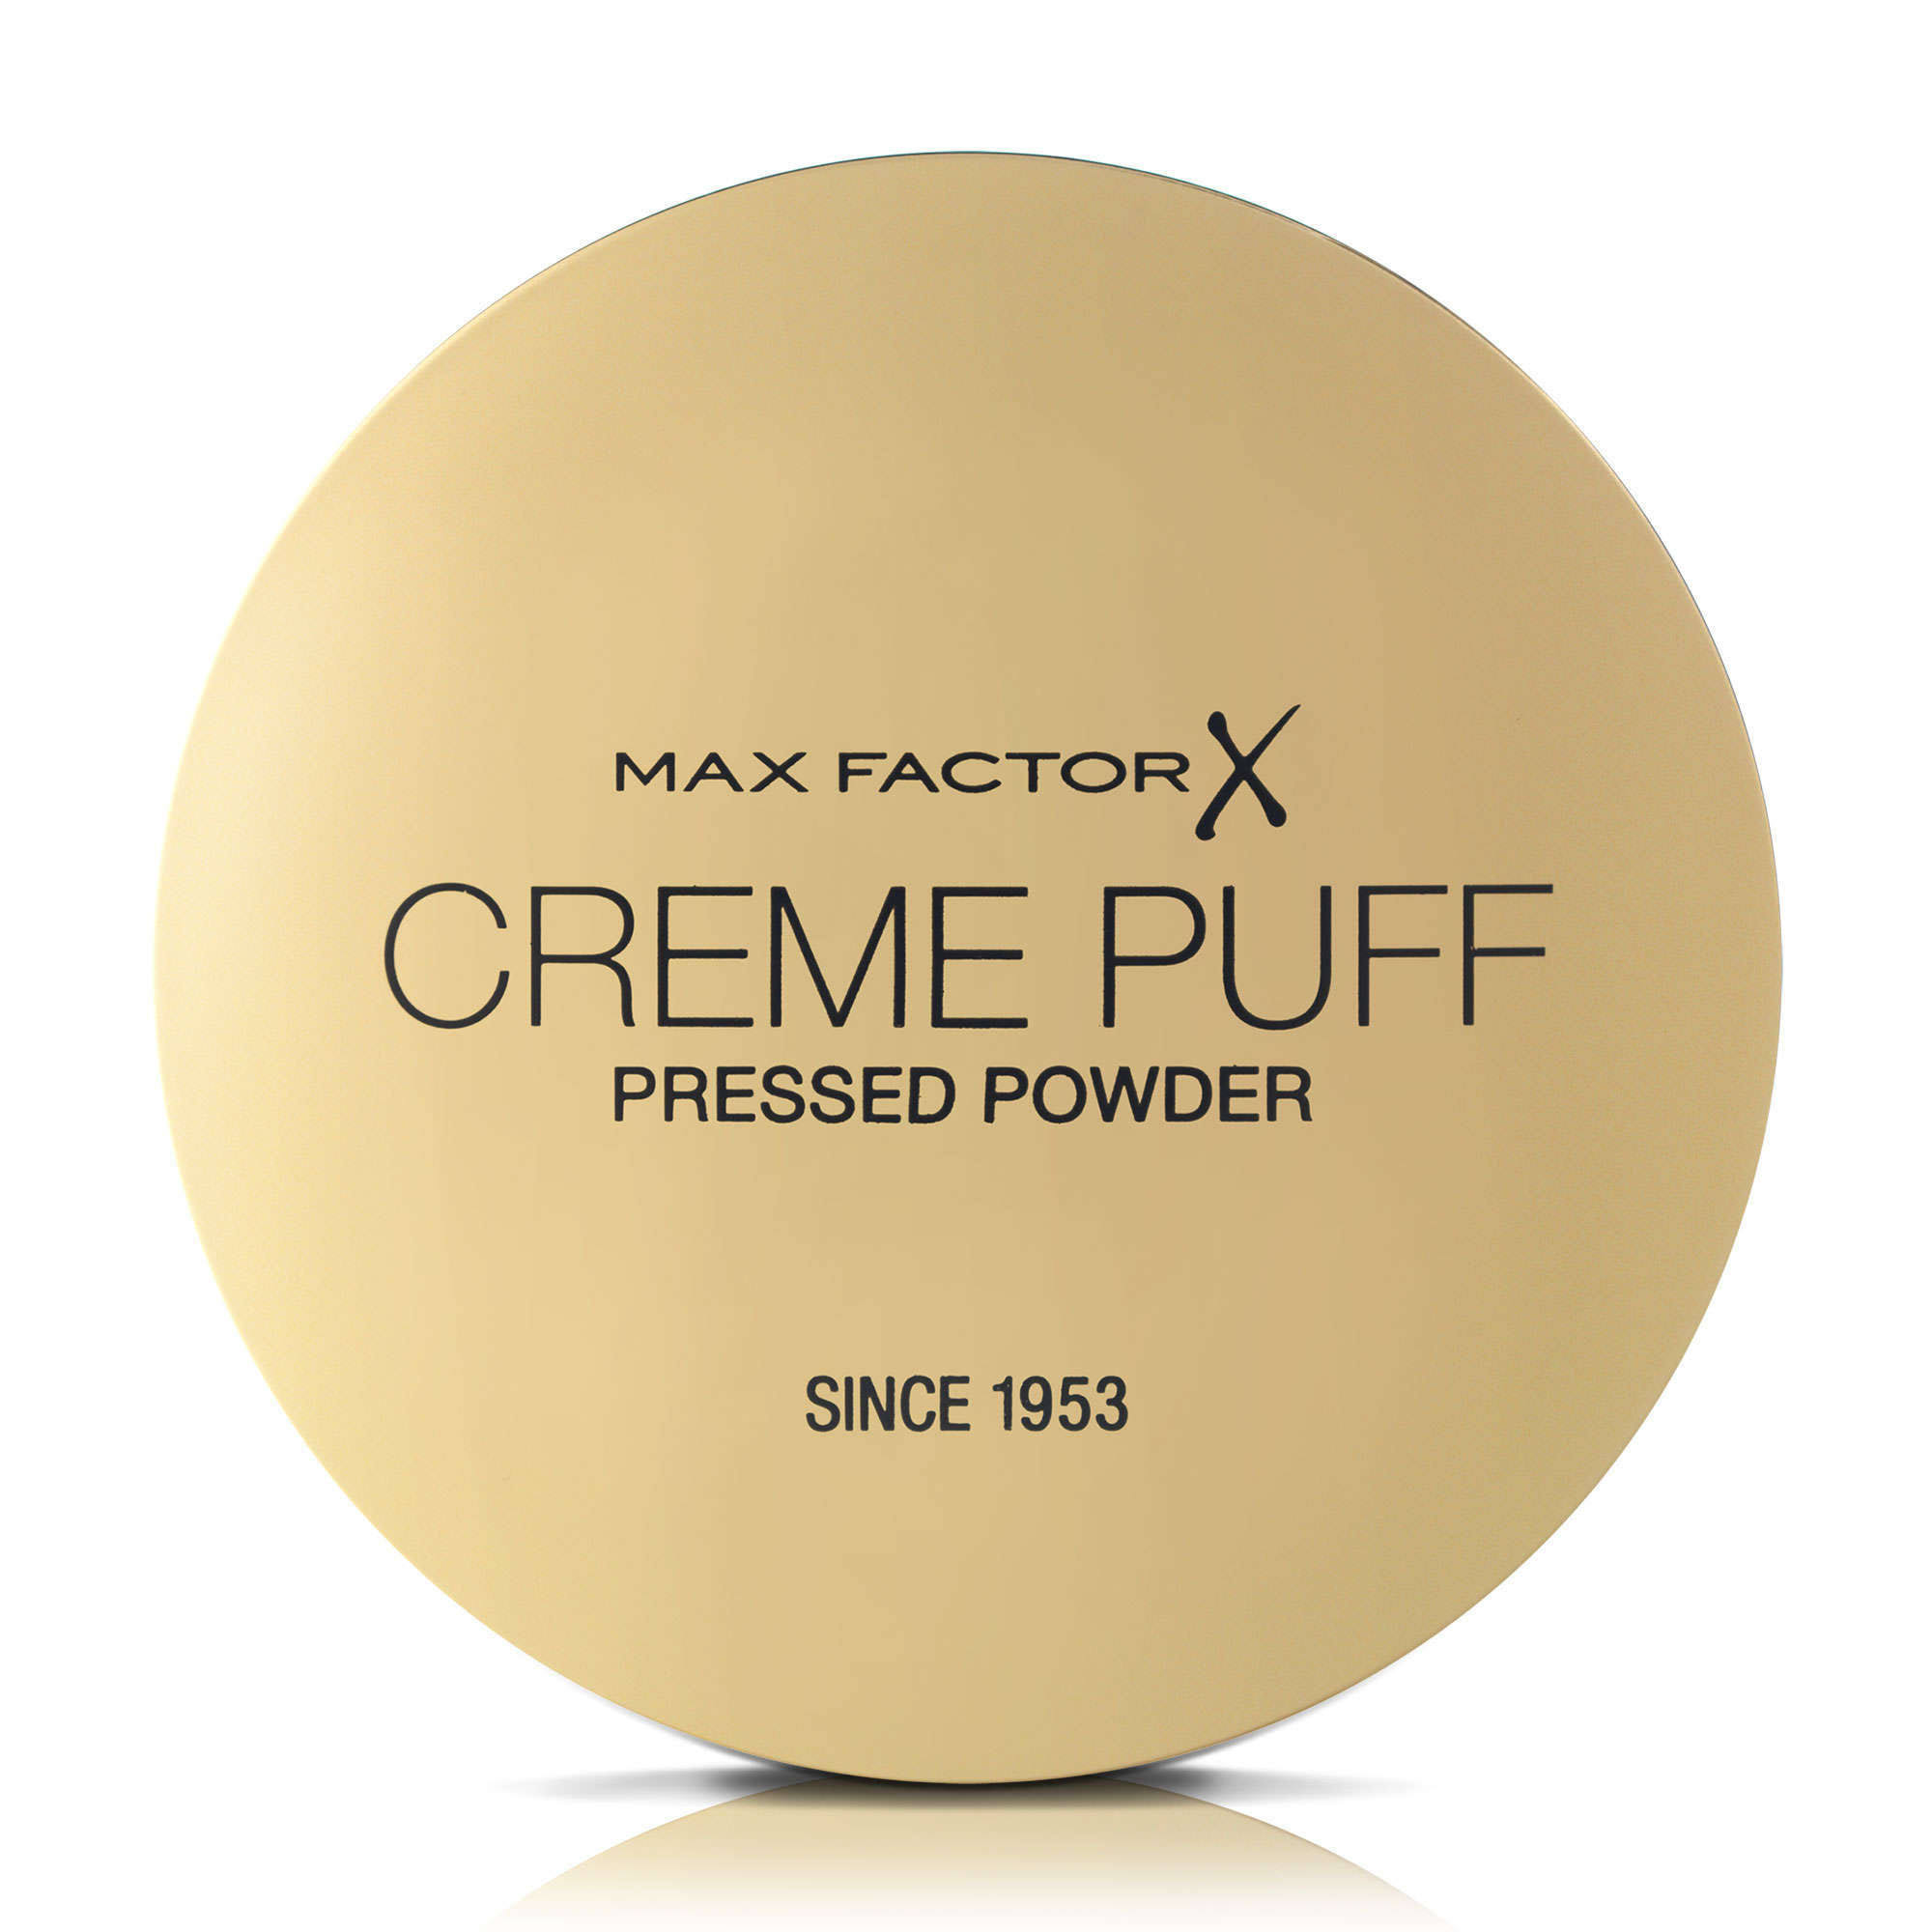 Max Factor Creme Puff Pressed Powder - 13 Nouveau Beige, 21g